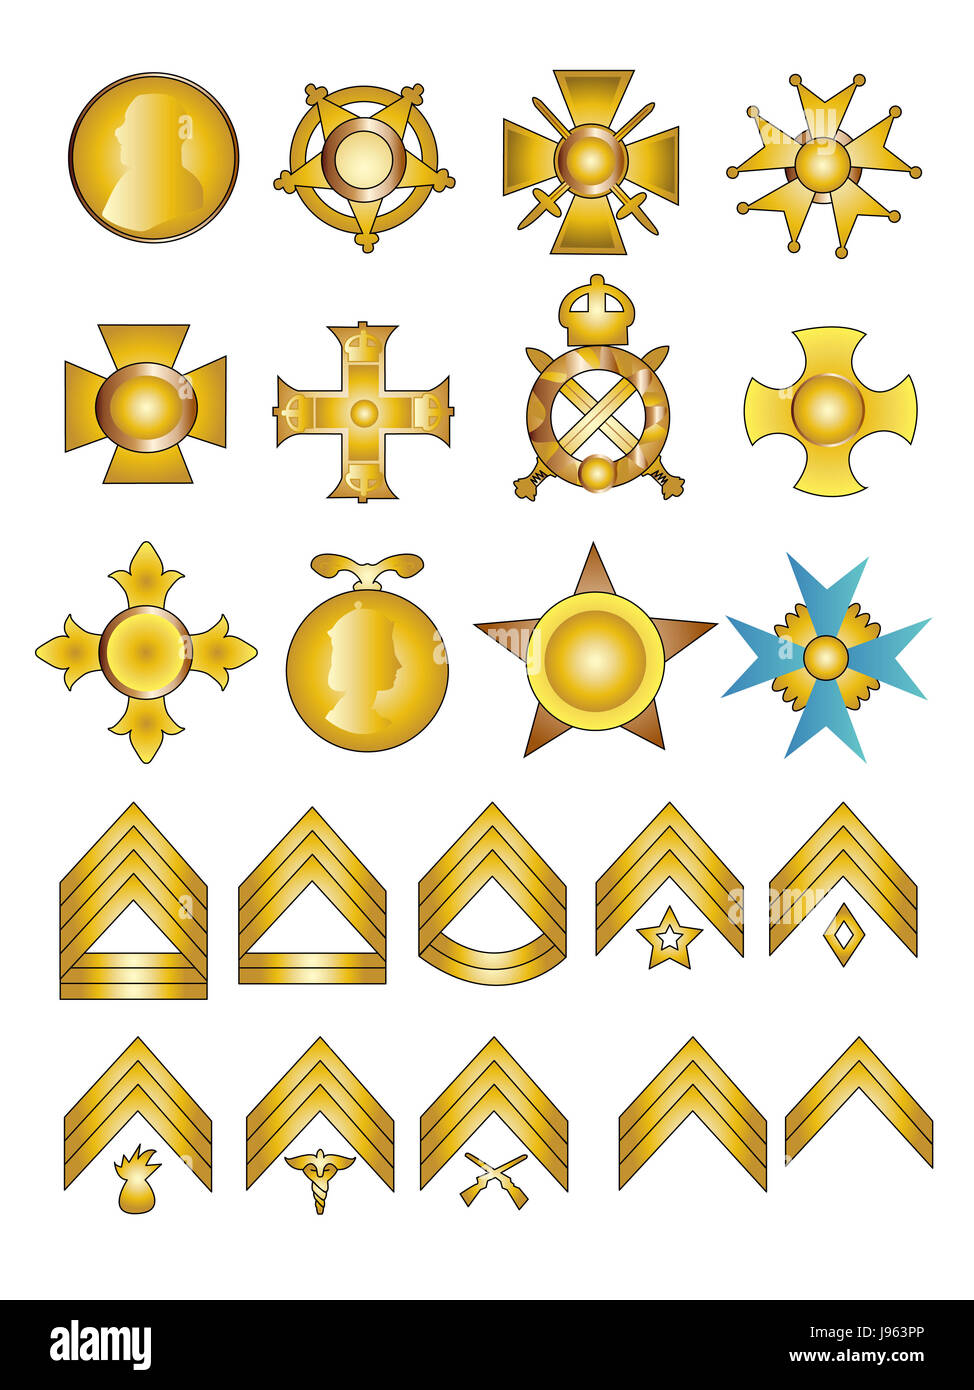 Emblem, Marine, Kreuz, Armee, Krieg, Uniform, Illustration, Serie, hell, glänzend, Stockfoto